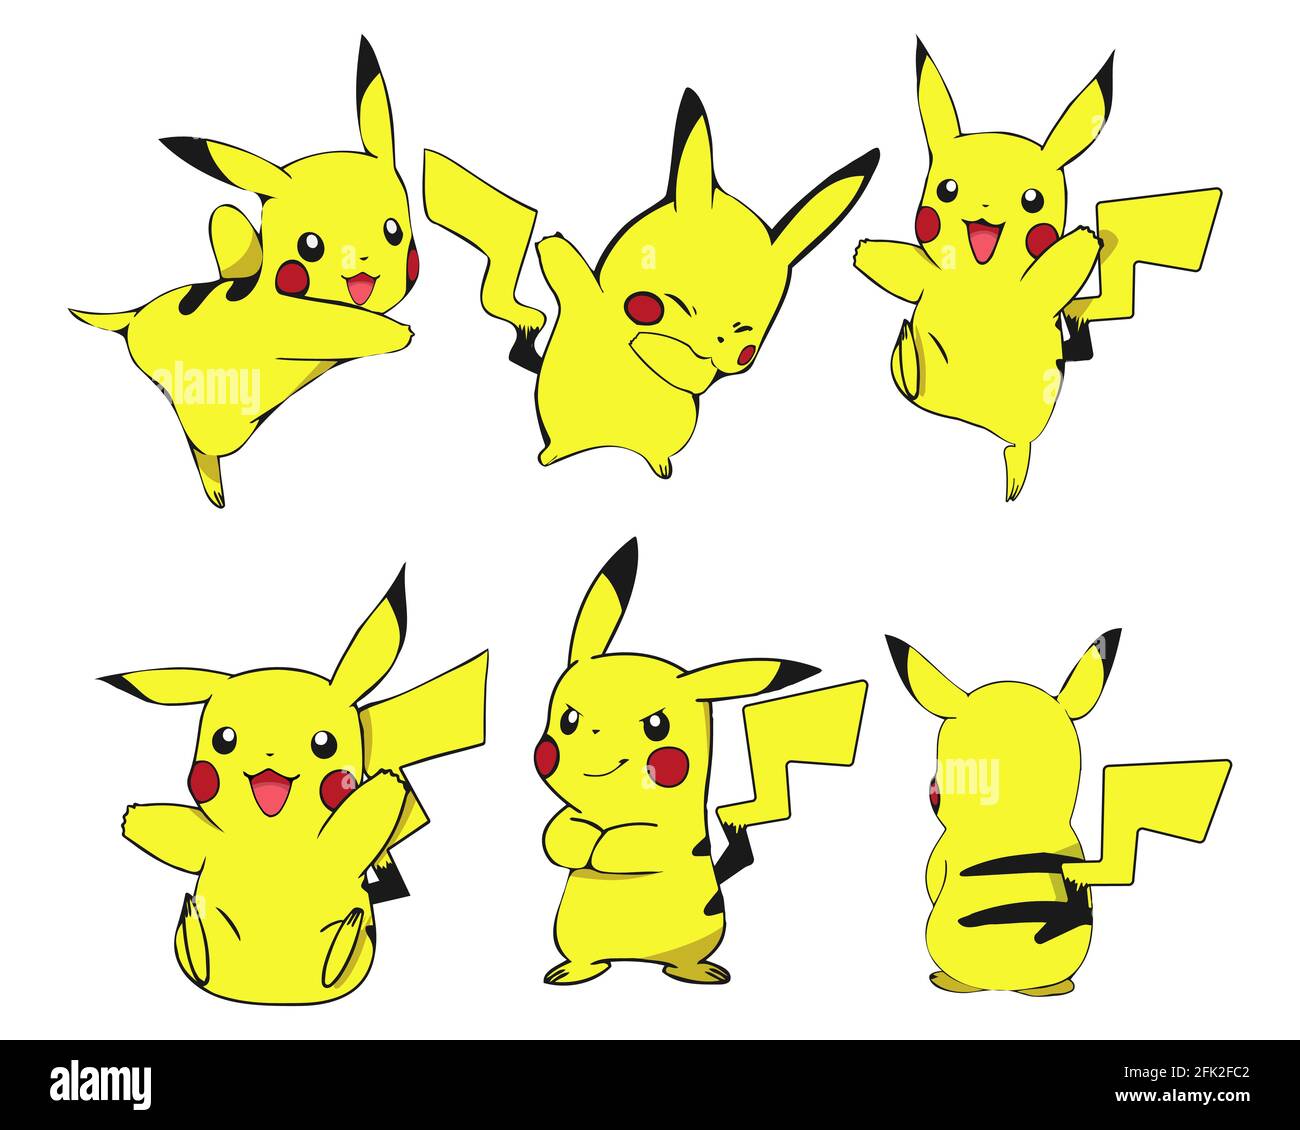 Pikachu cartoon hi-res stock photography and images - Alamy